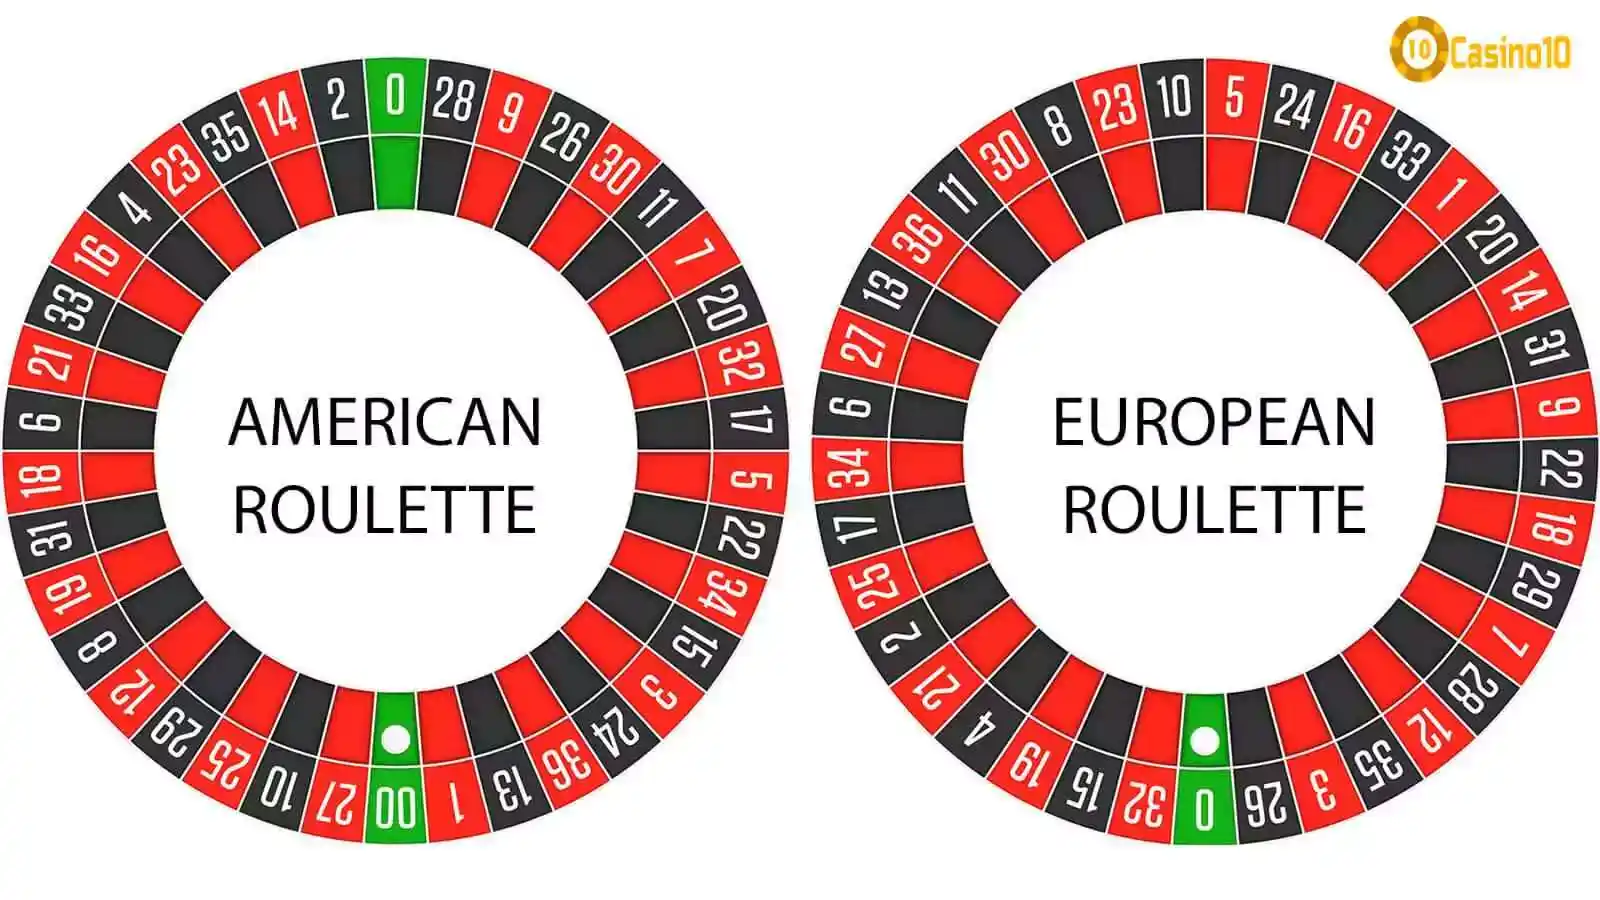 American Roulette vs. European Roulette